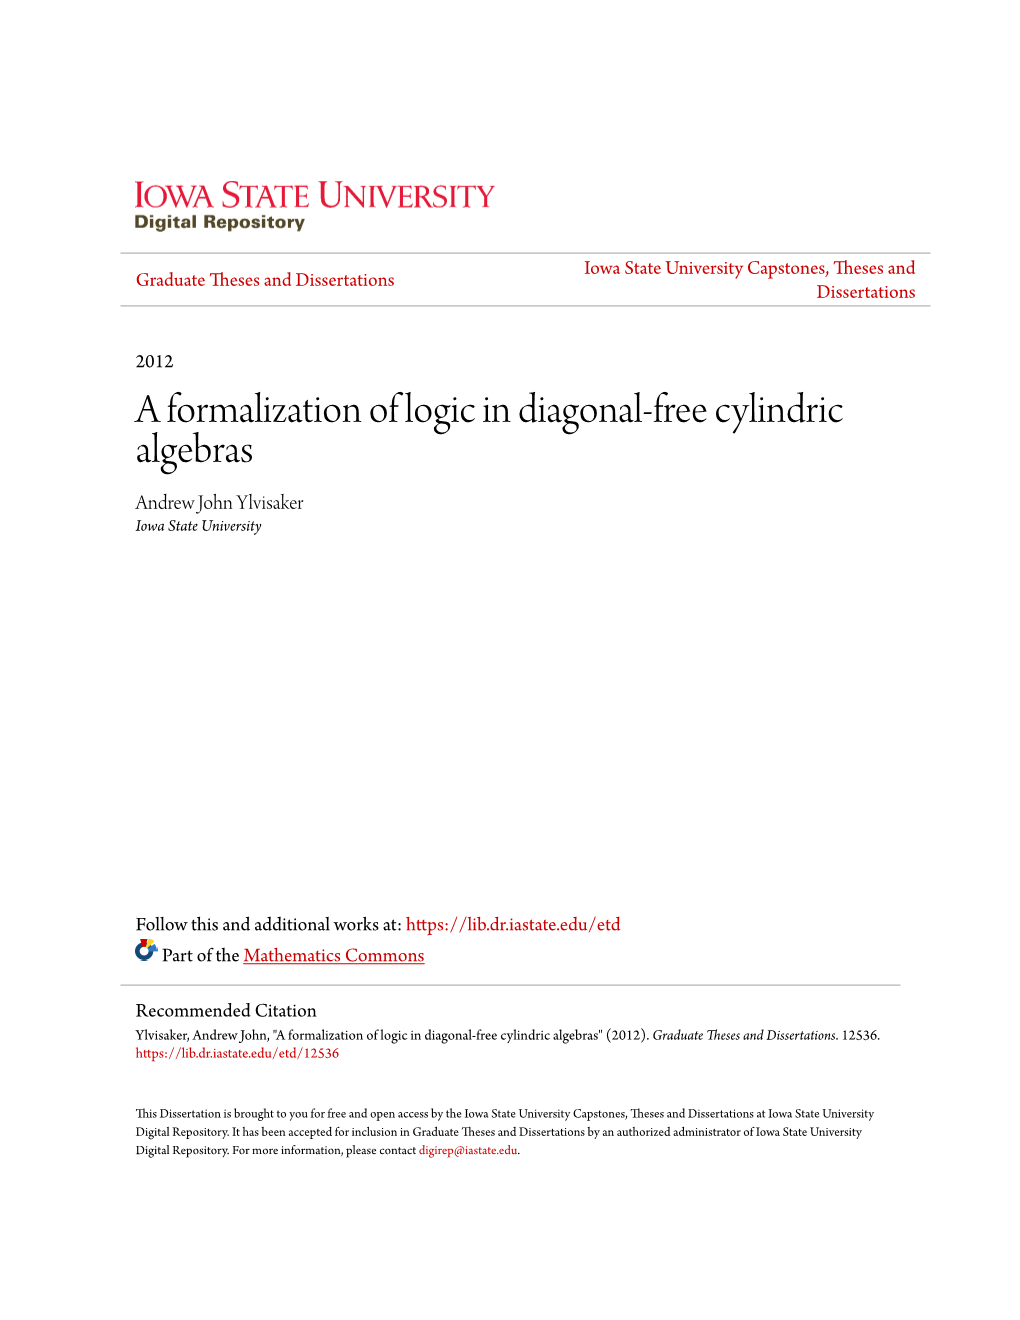 A Formalization of Logic in Diagonal-Free Cylindric Algebras Andrew John Ylvisaker Iowa State University